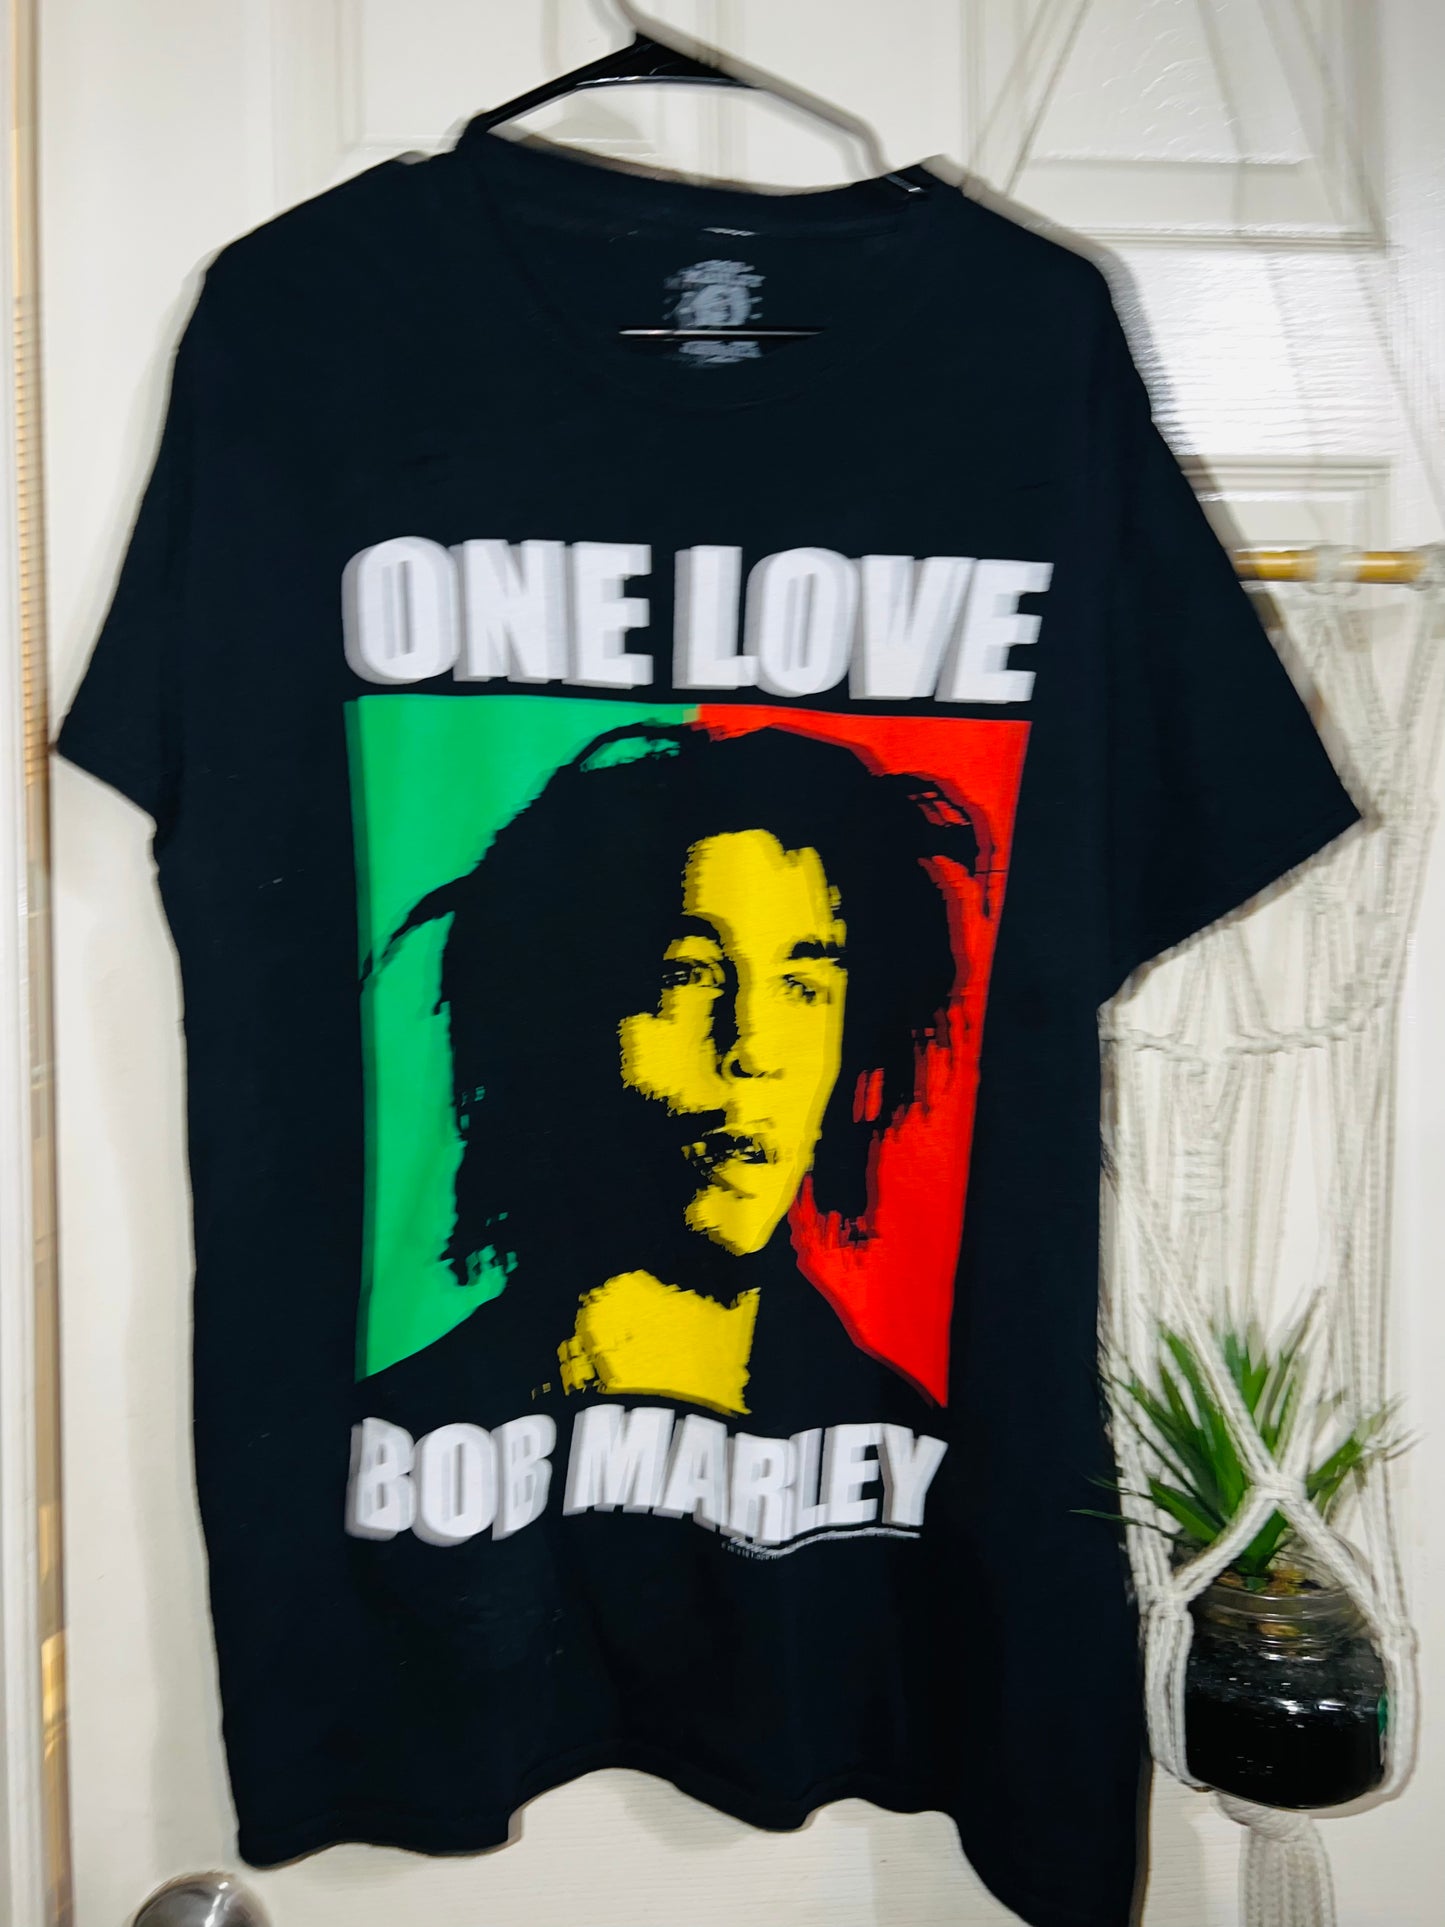 Bob Marley Vintage One Love OS Distressed Tee